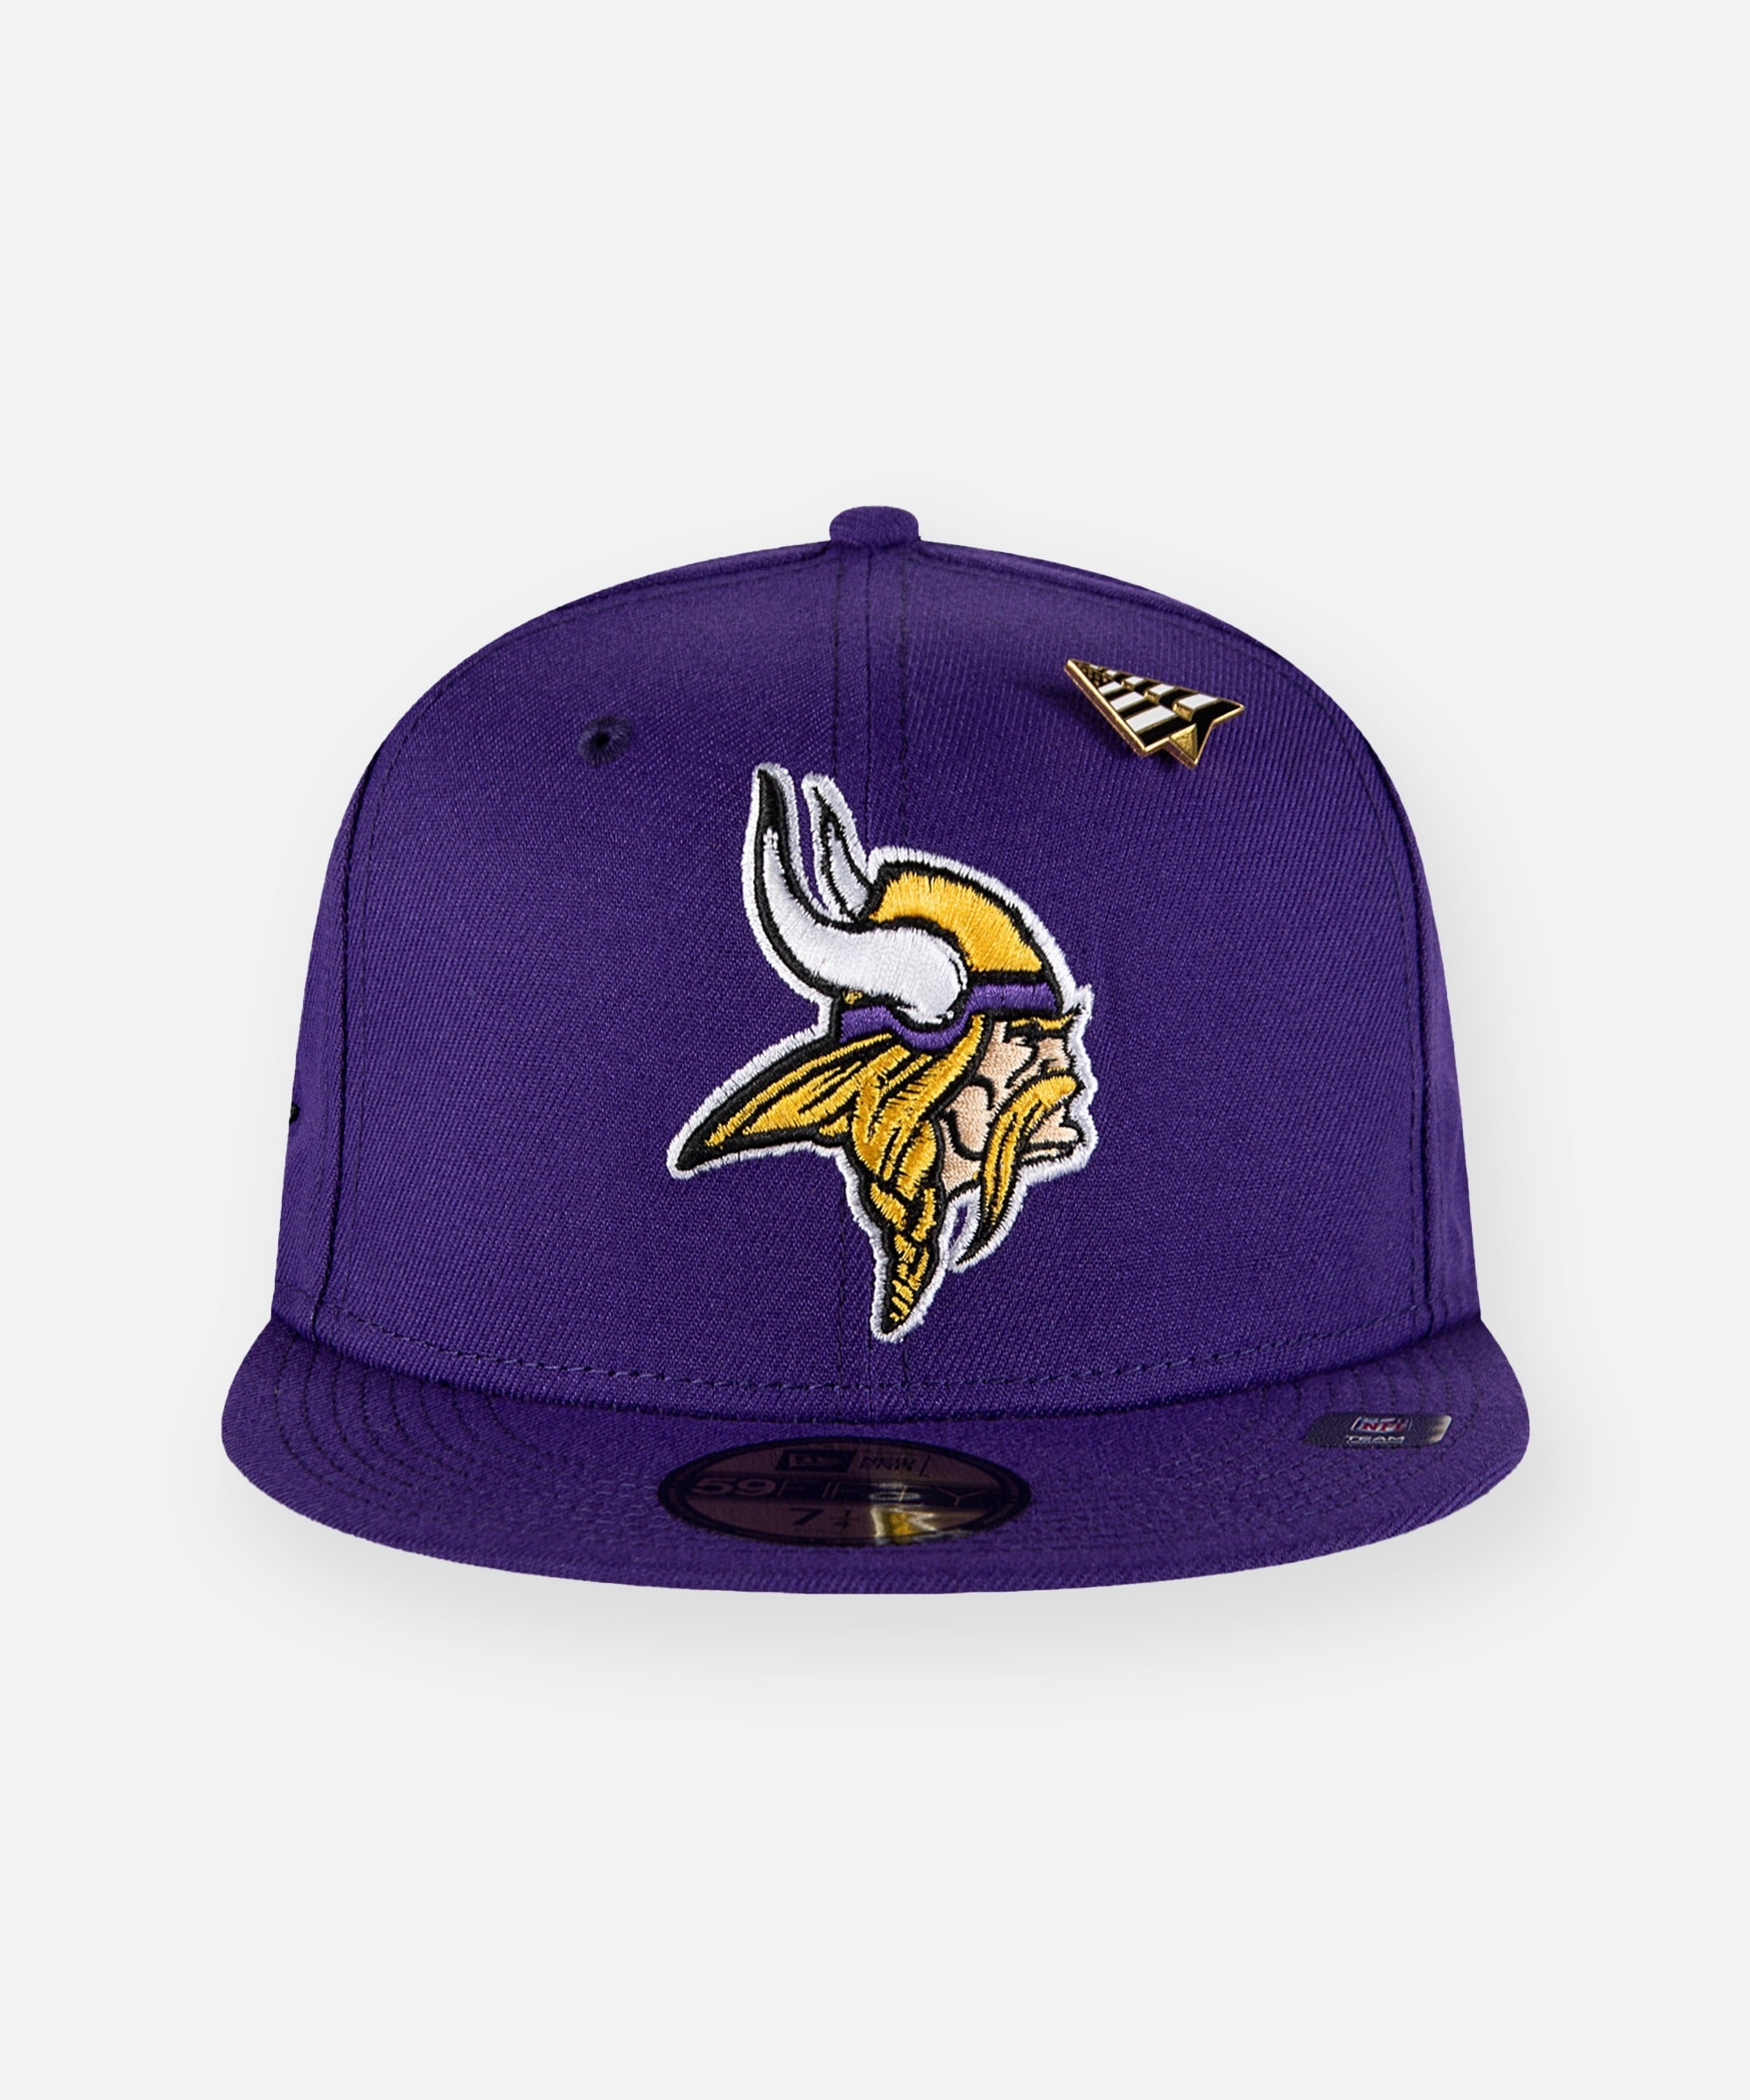 Minnesota Vikings Fitted Hats